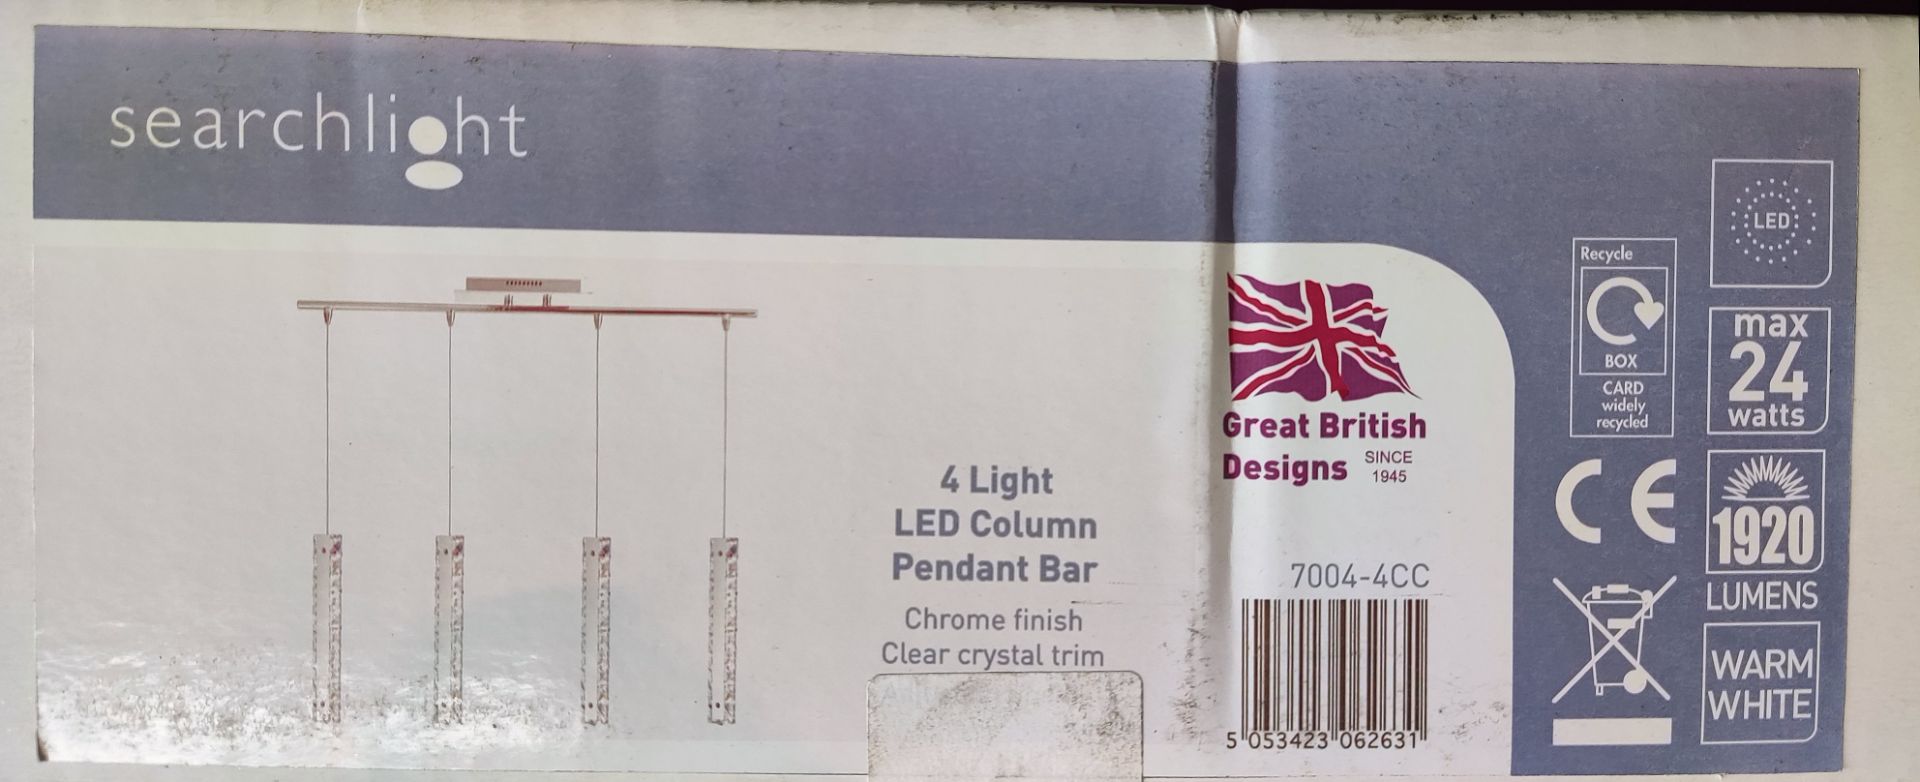 1 x Searchlight 4 Light LED Column Pendant Bar - Chrome Finish, Clear Crystal Trim - New Boxed Stock